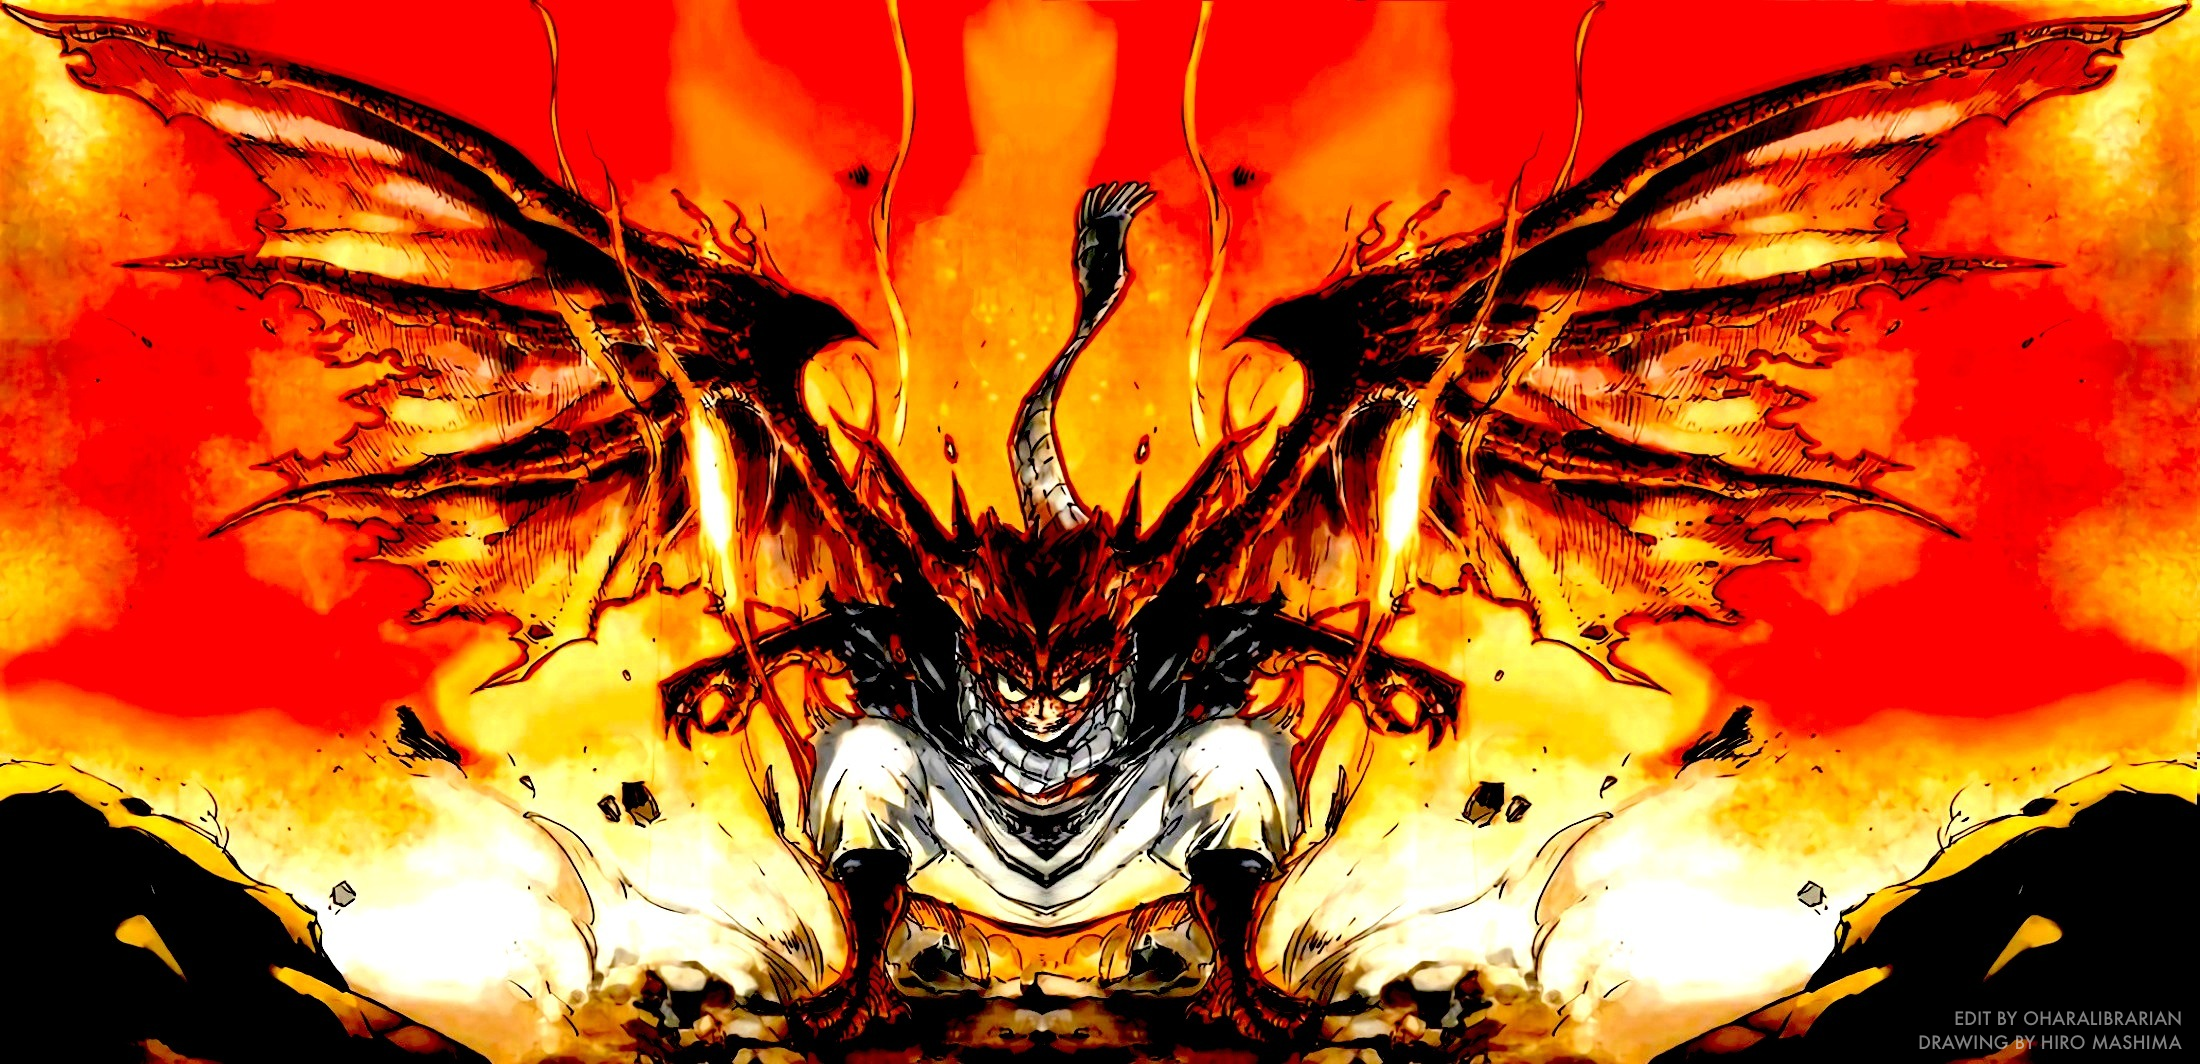 natsu wallpaper,fictional character,demon,cg artwork,dragon,fiction